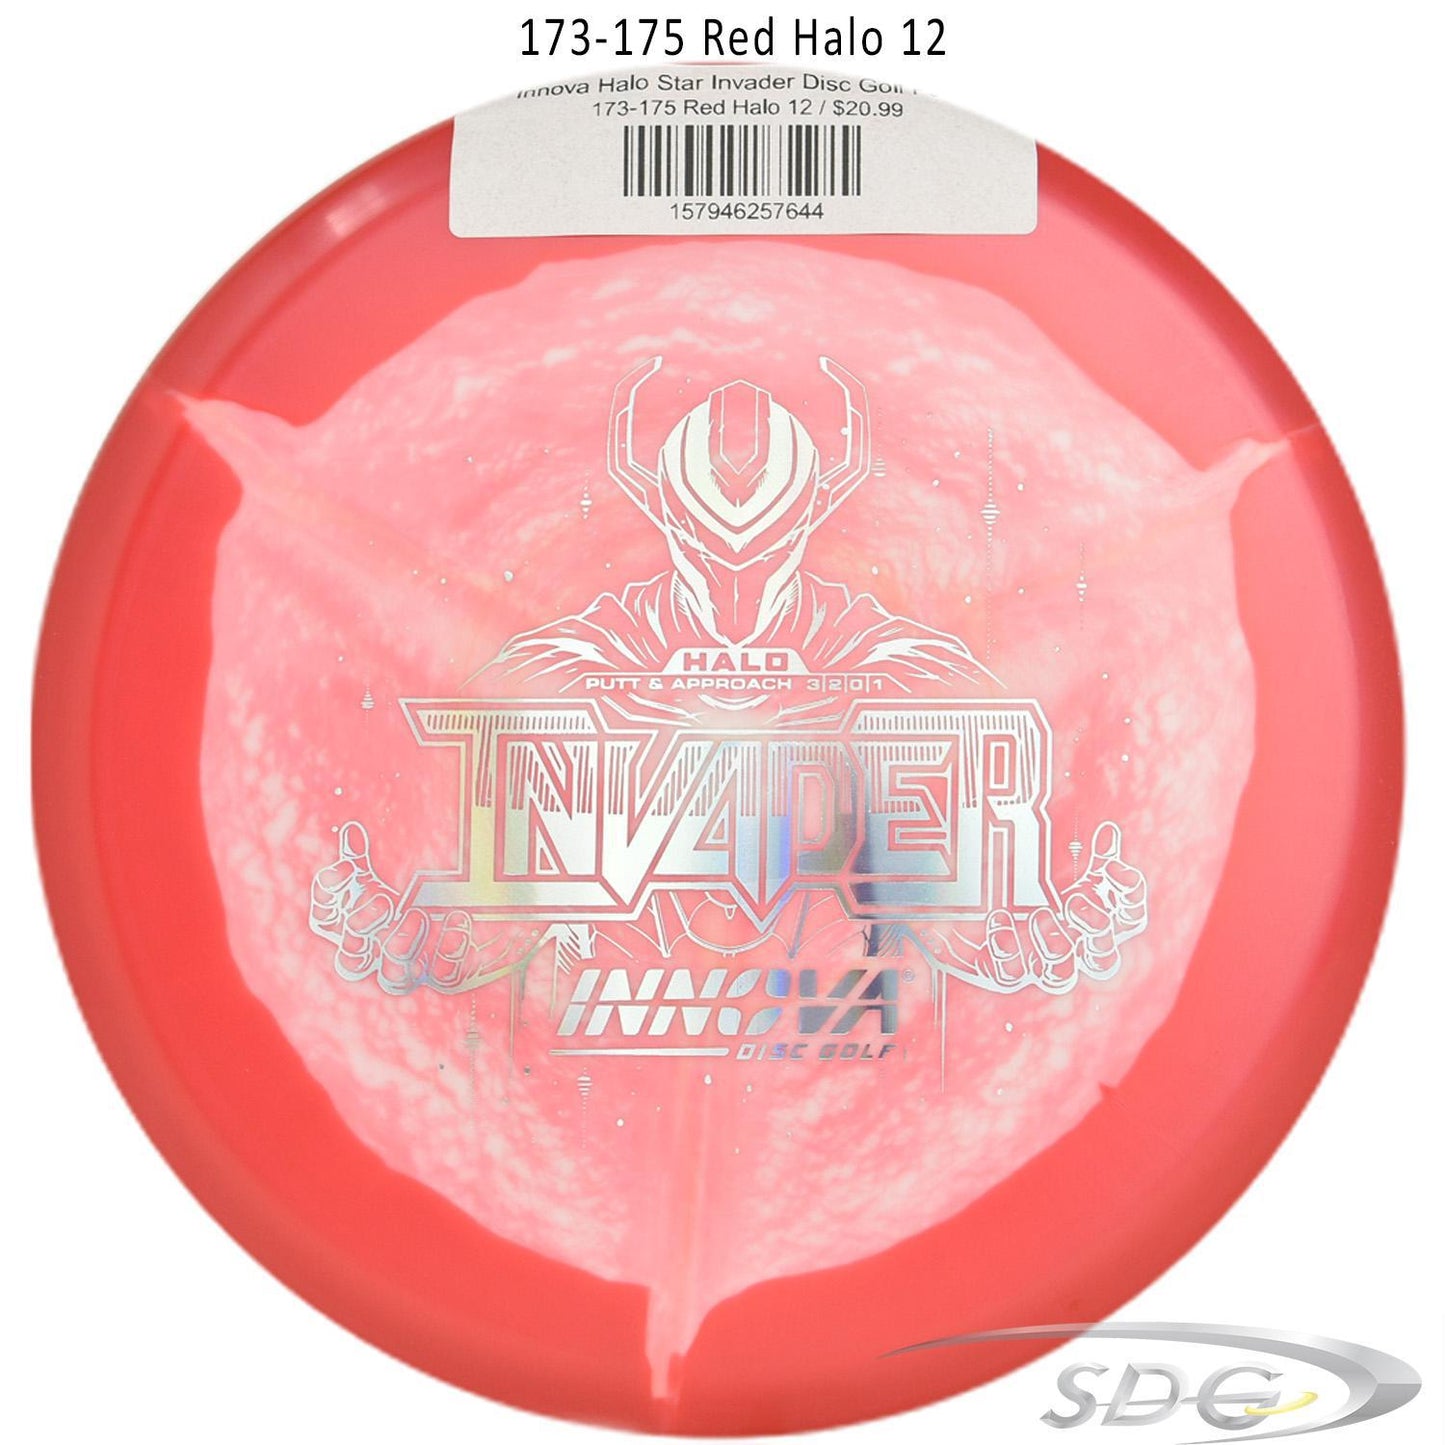 innova-halo-star-invader-disc-golf-putter 173-175 Red Halo 12 